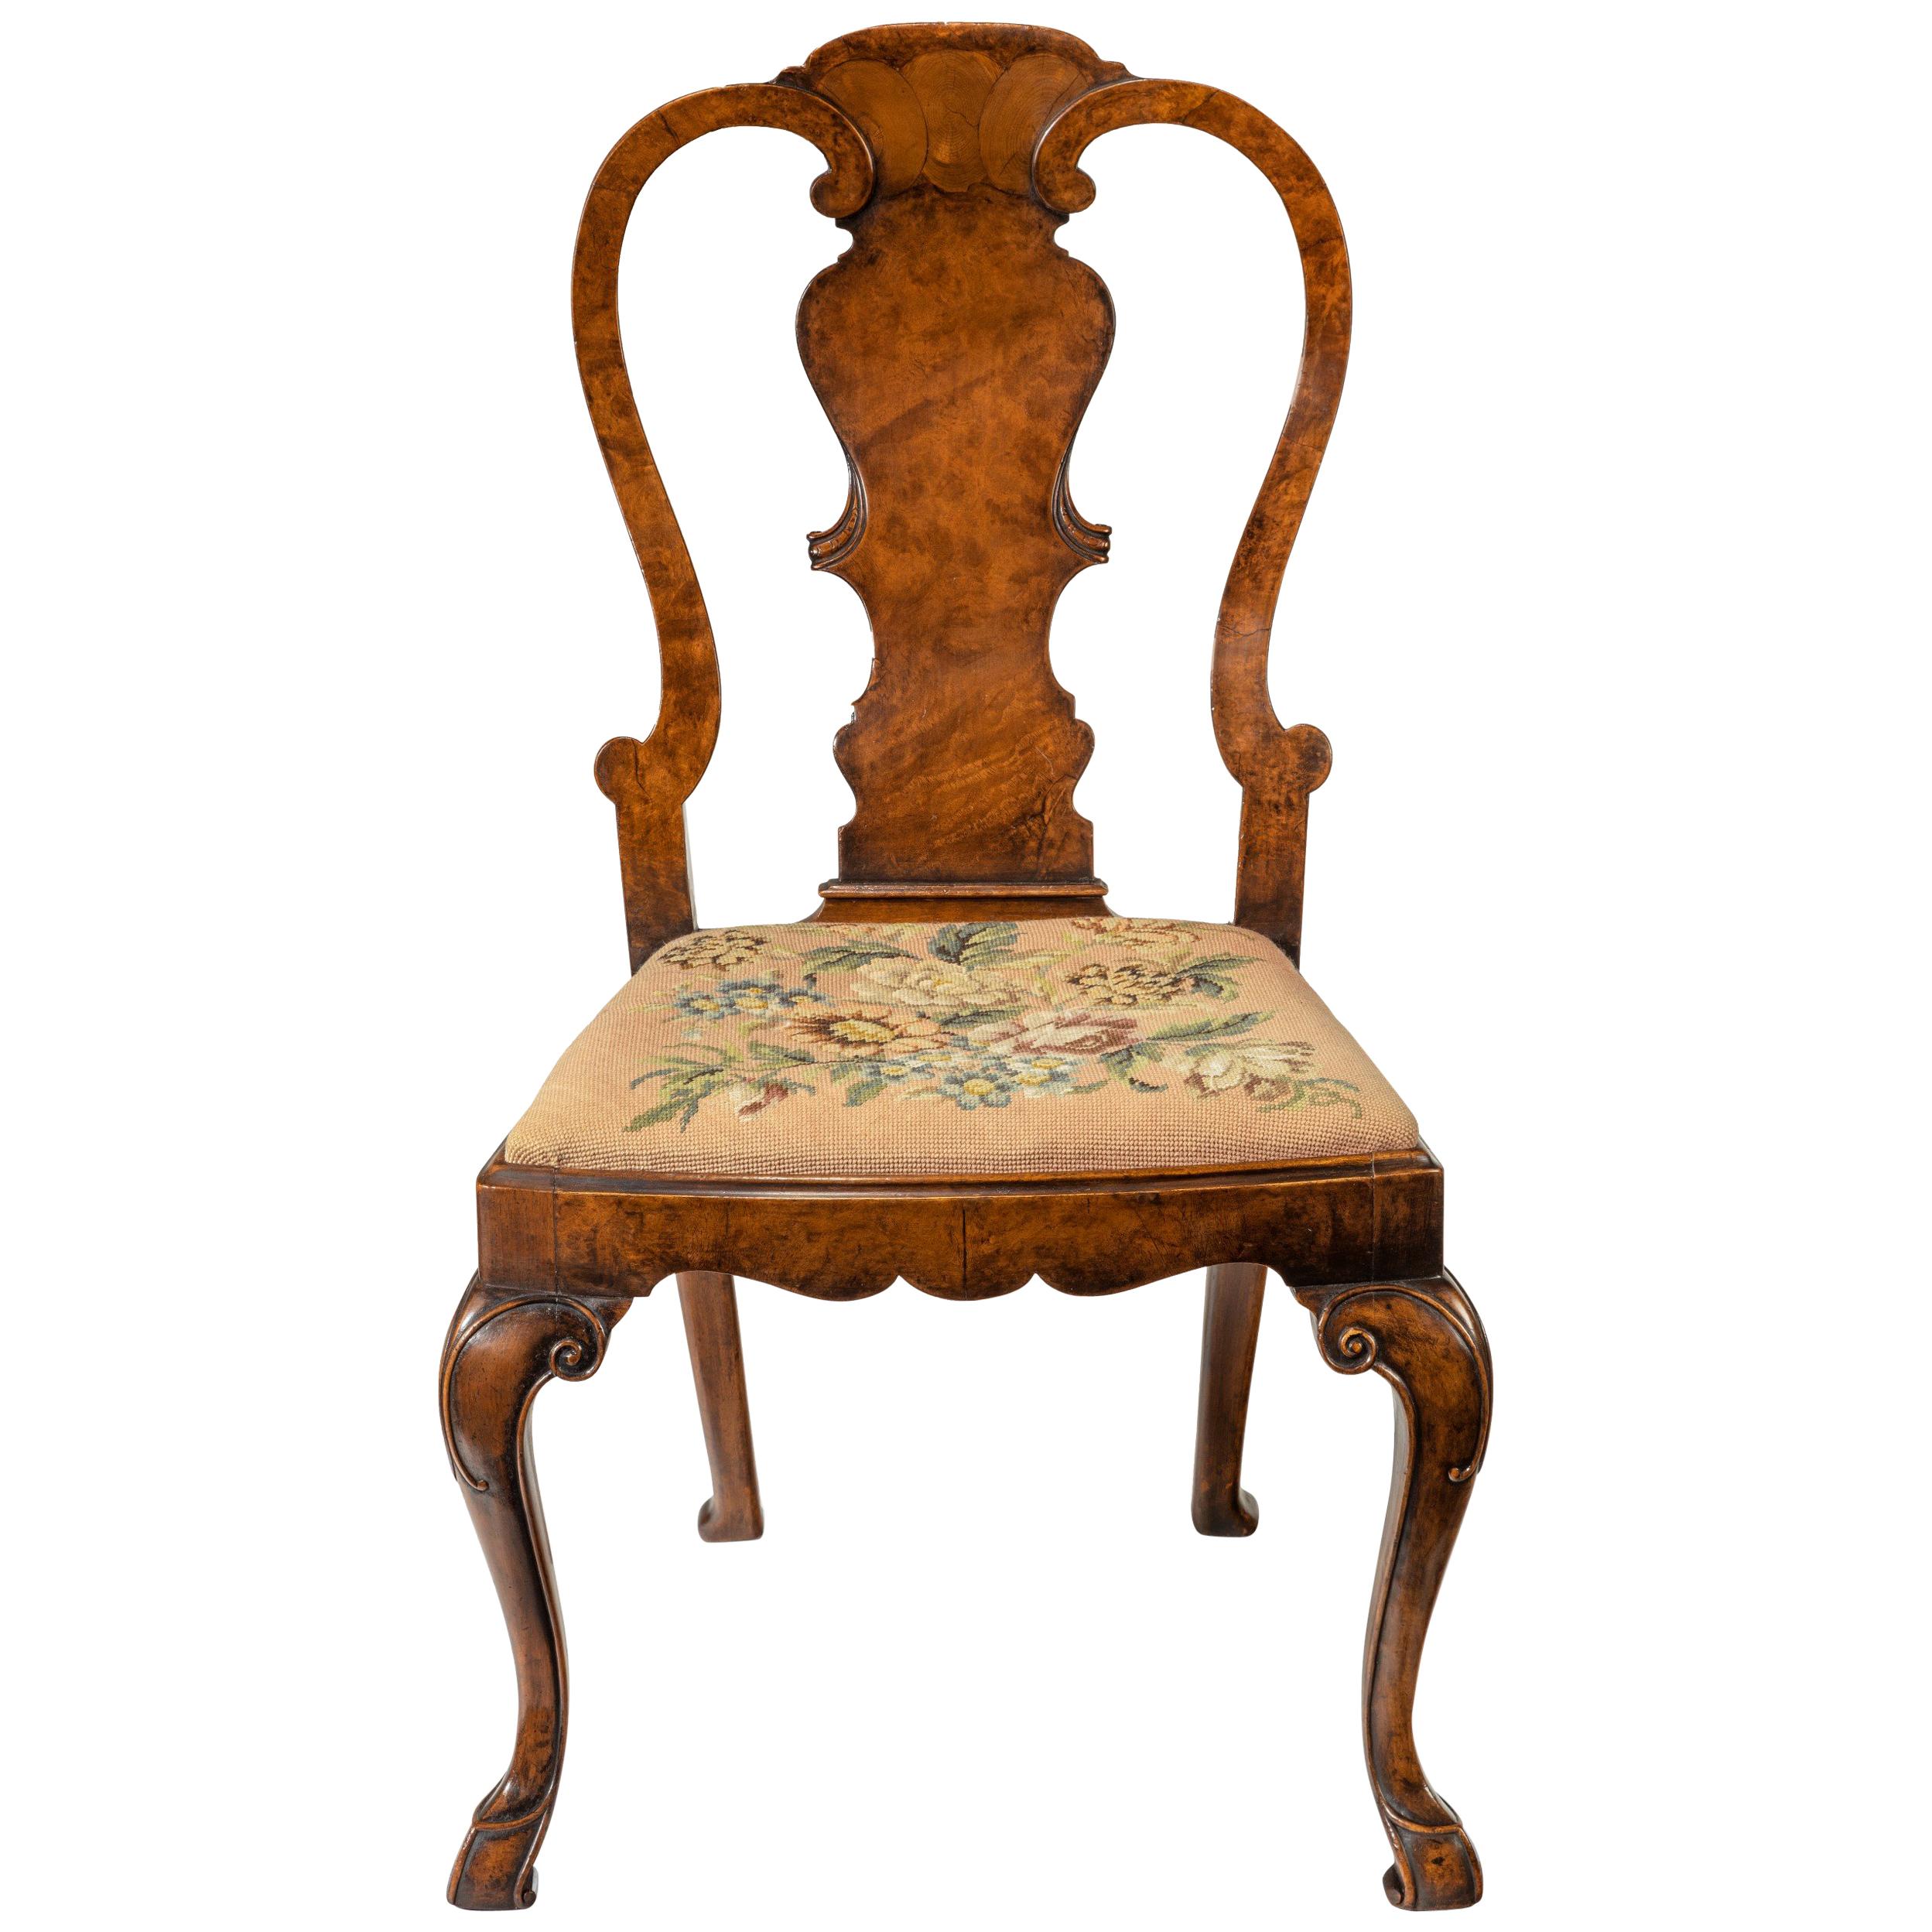 Quality 19th Century Walnut Side Chair with Original Needlework Seat